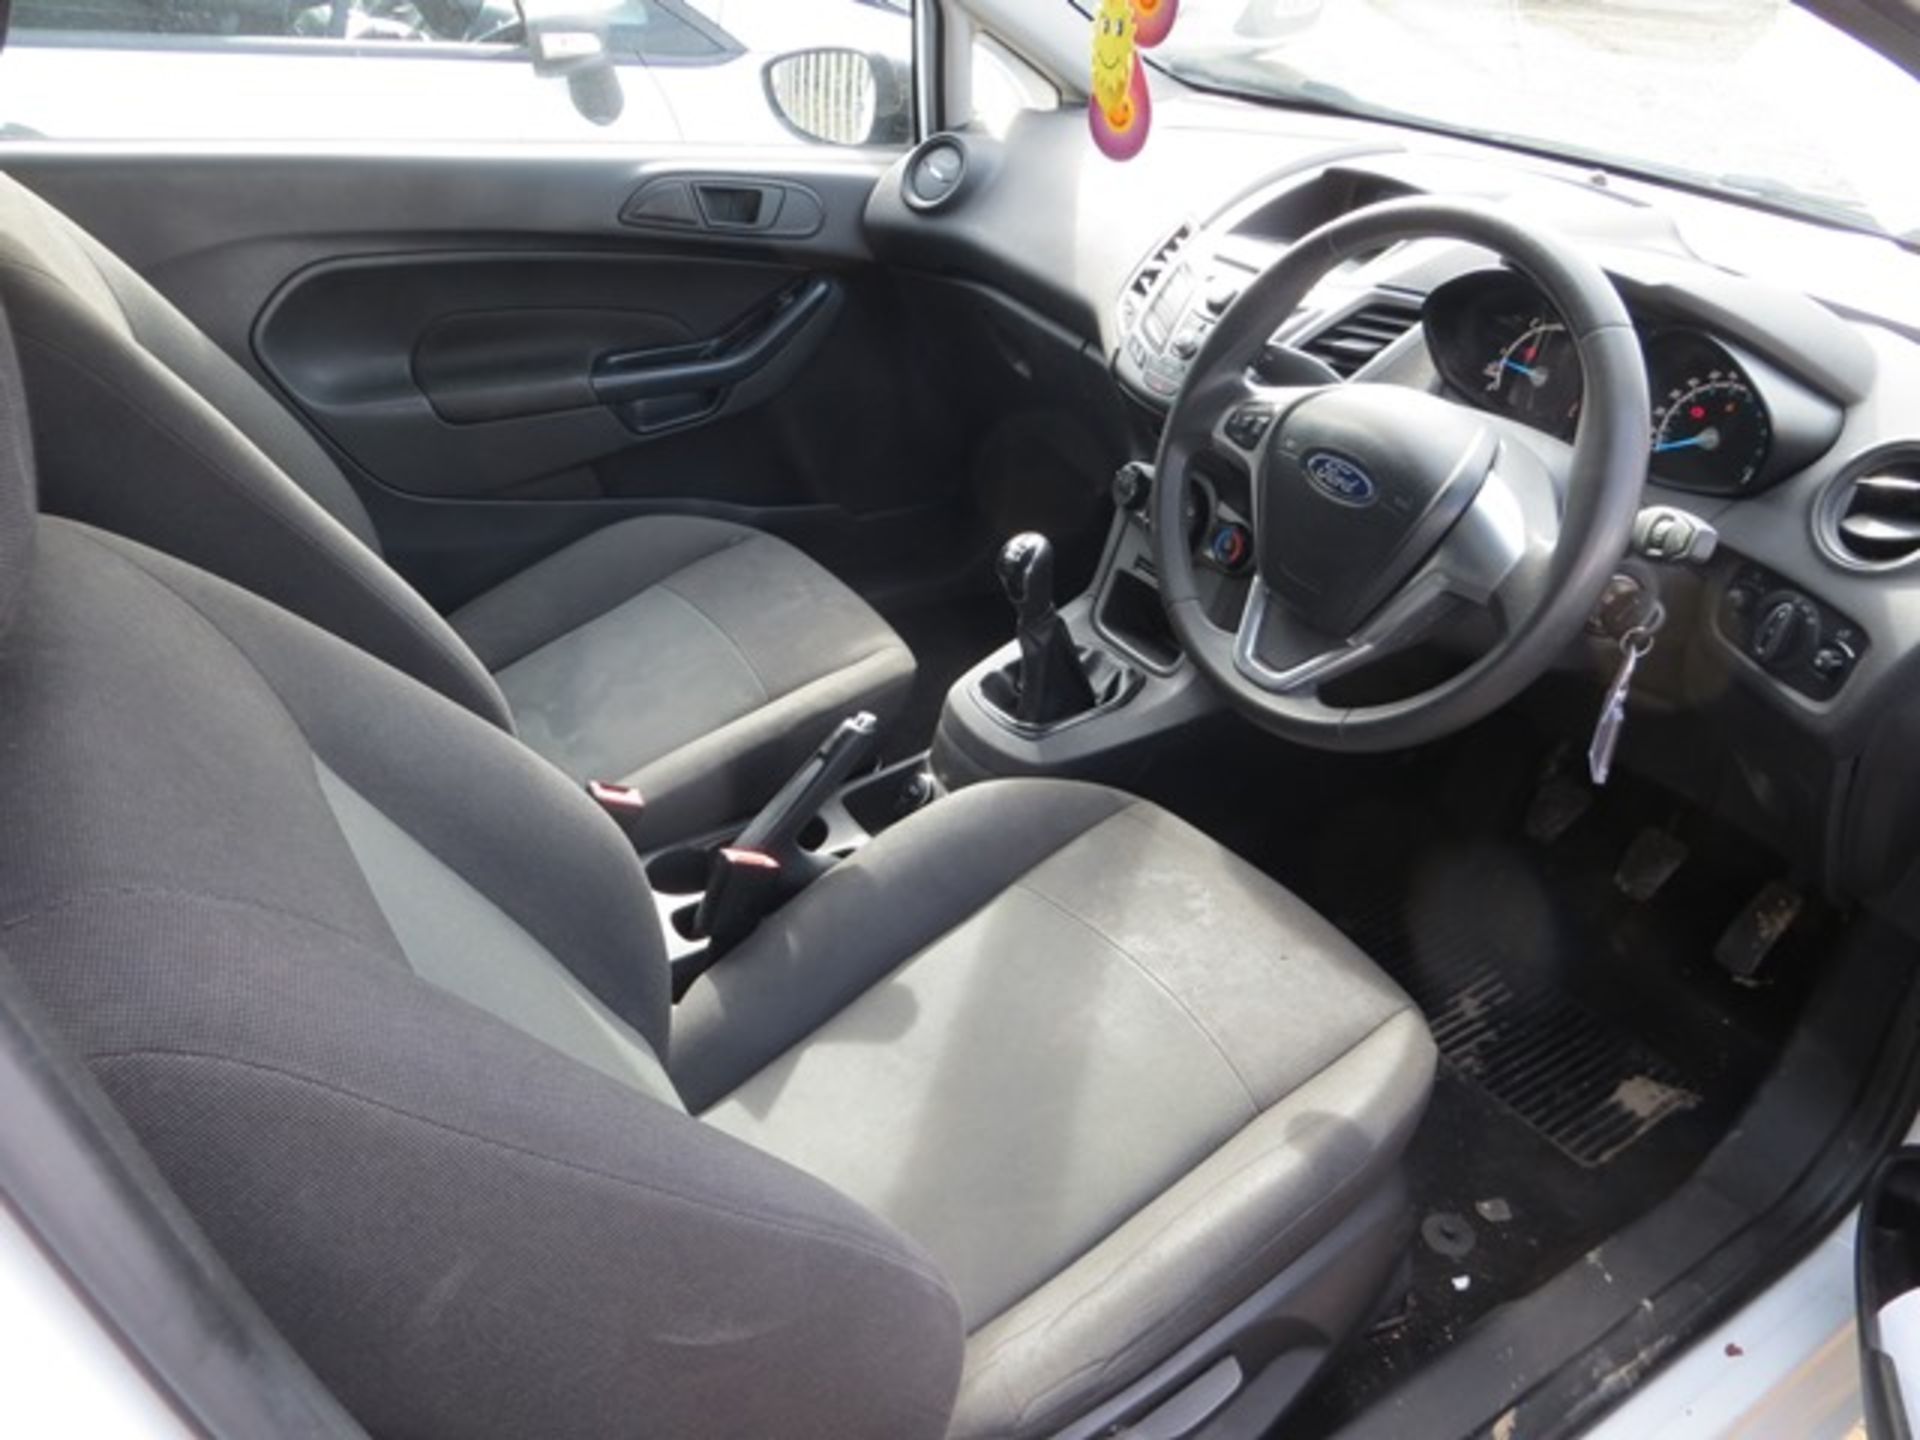 Ford Fiesta Base 1.5 TDCi Eco diesel panel van 1499cc Reg No NL14UXF DOR 01/05/2014 125,189 recorded - Image 6 of 7